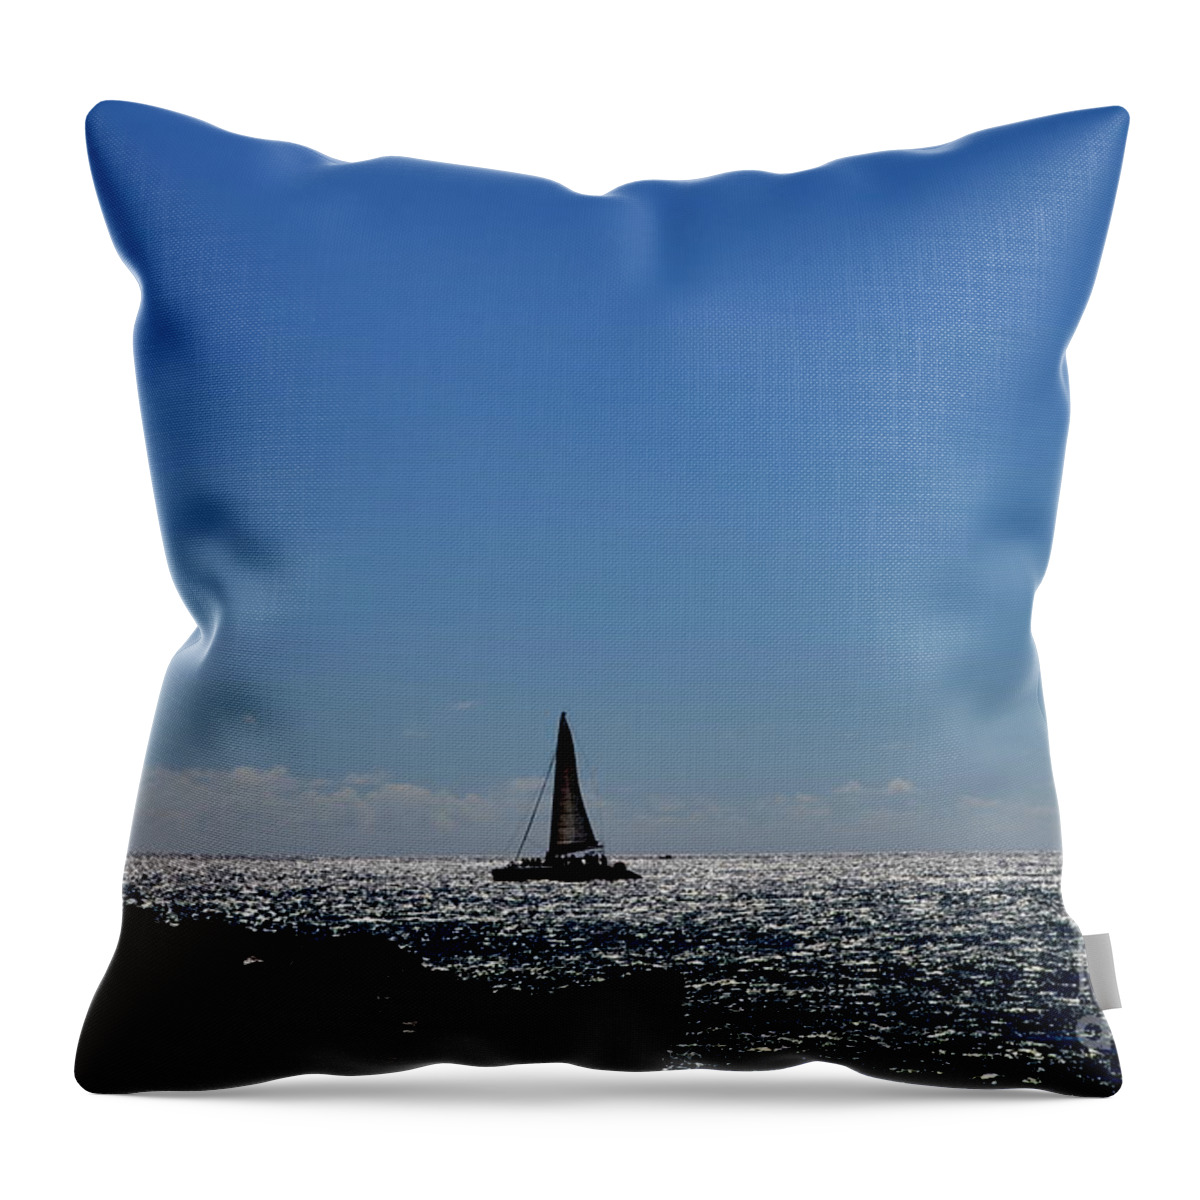 Glass Beach Throw Pillow featuring the photograph Evening Sail Off Glass Beach Kauai Hawaii by Mary Deal